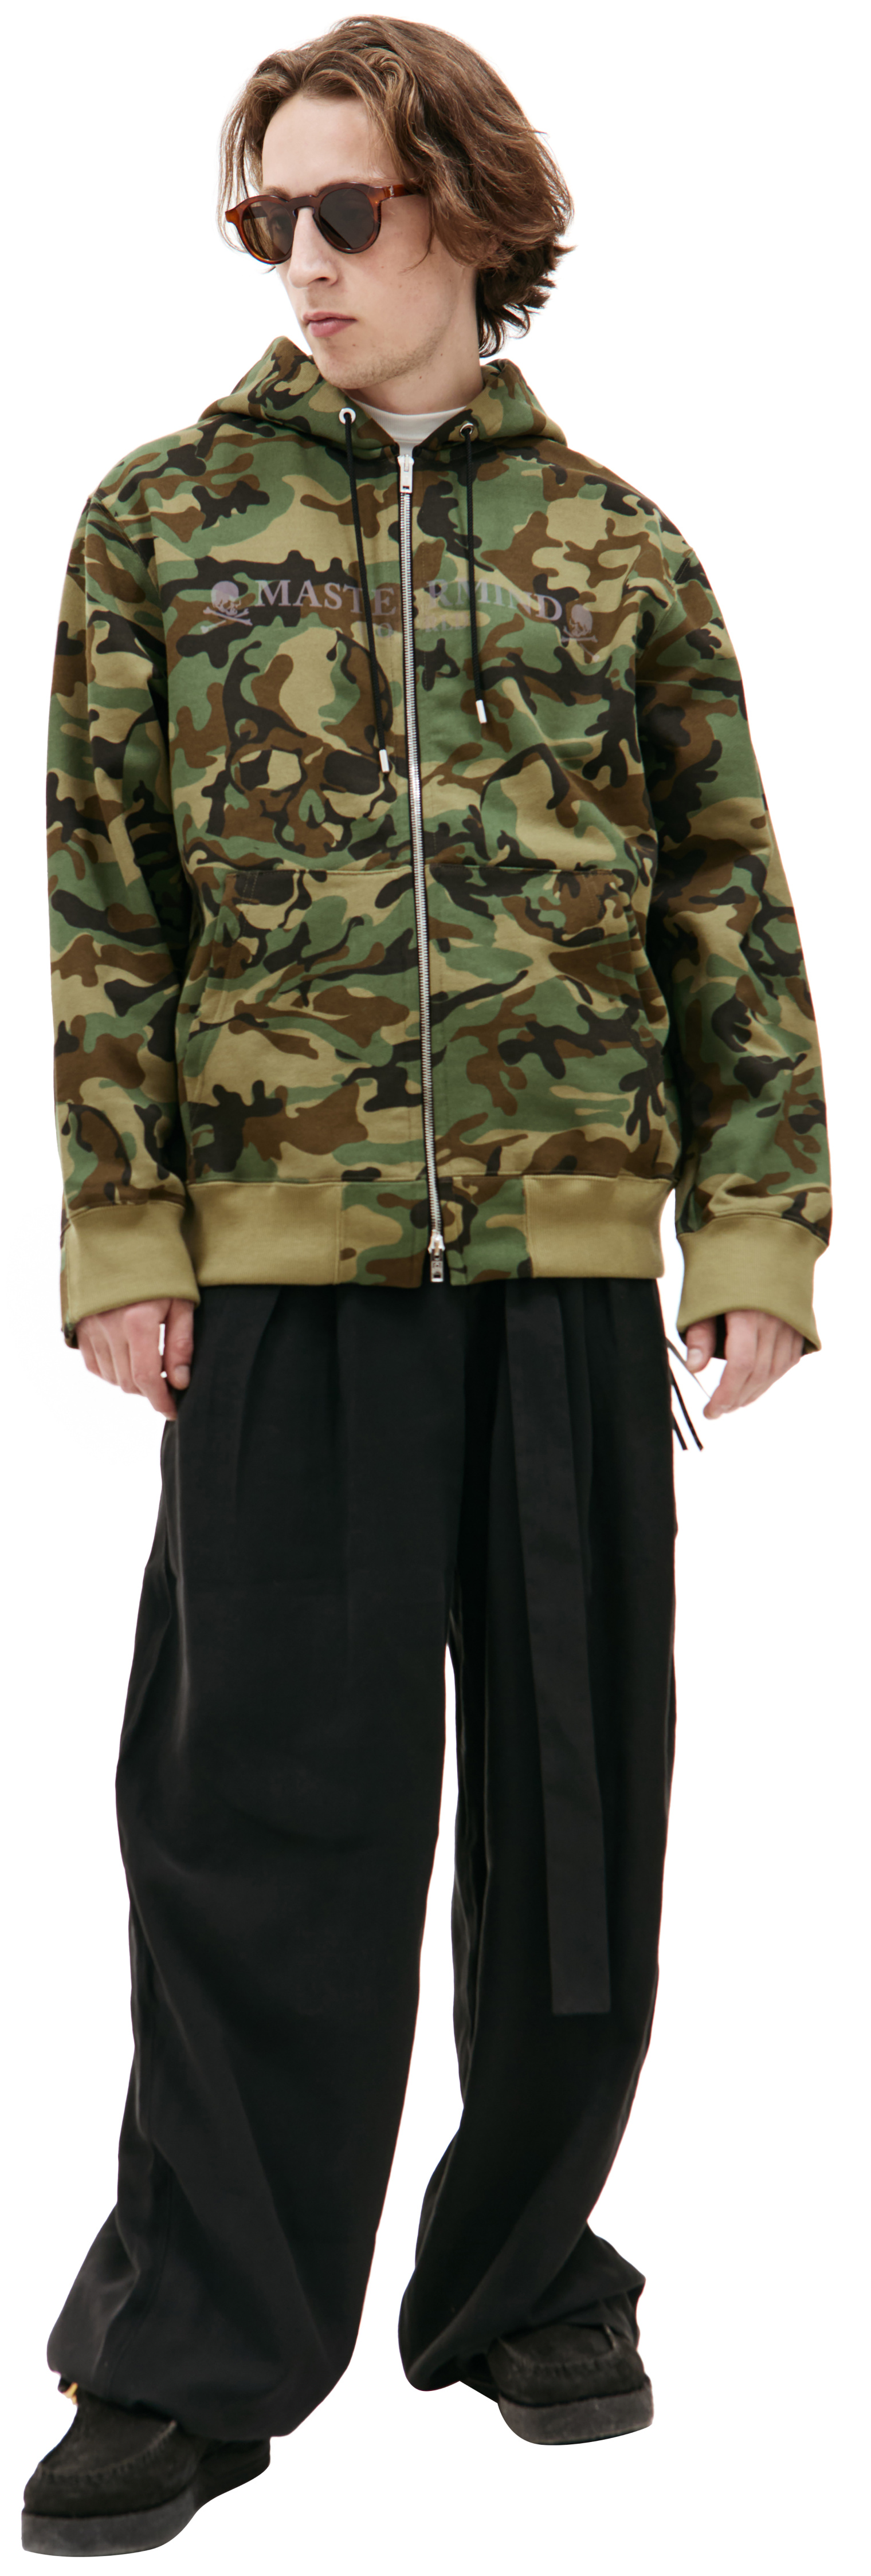 Mastermind WORLD Khaki zip up hoodie